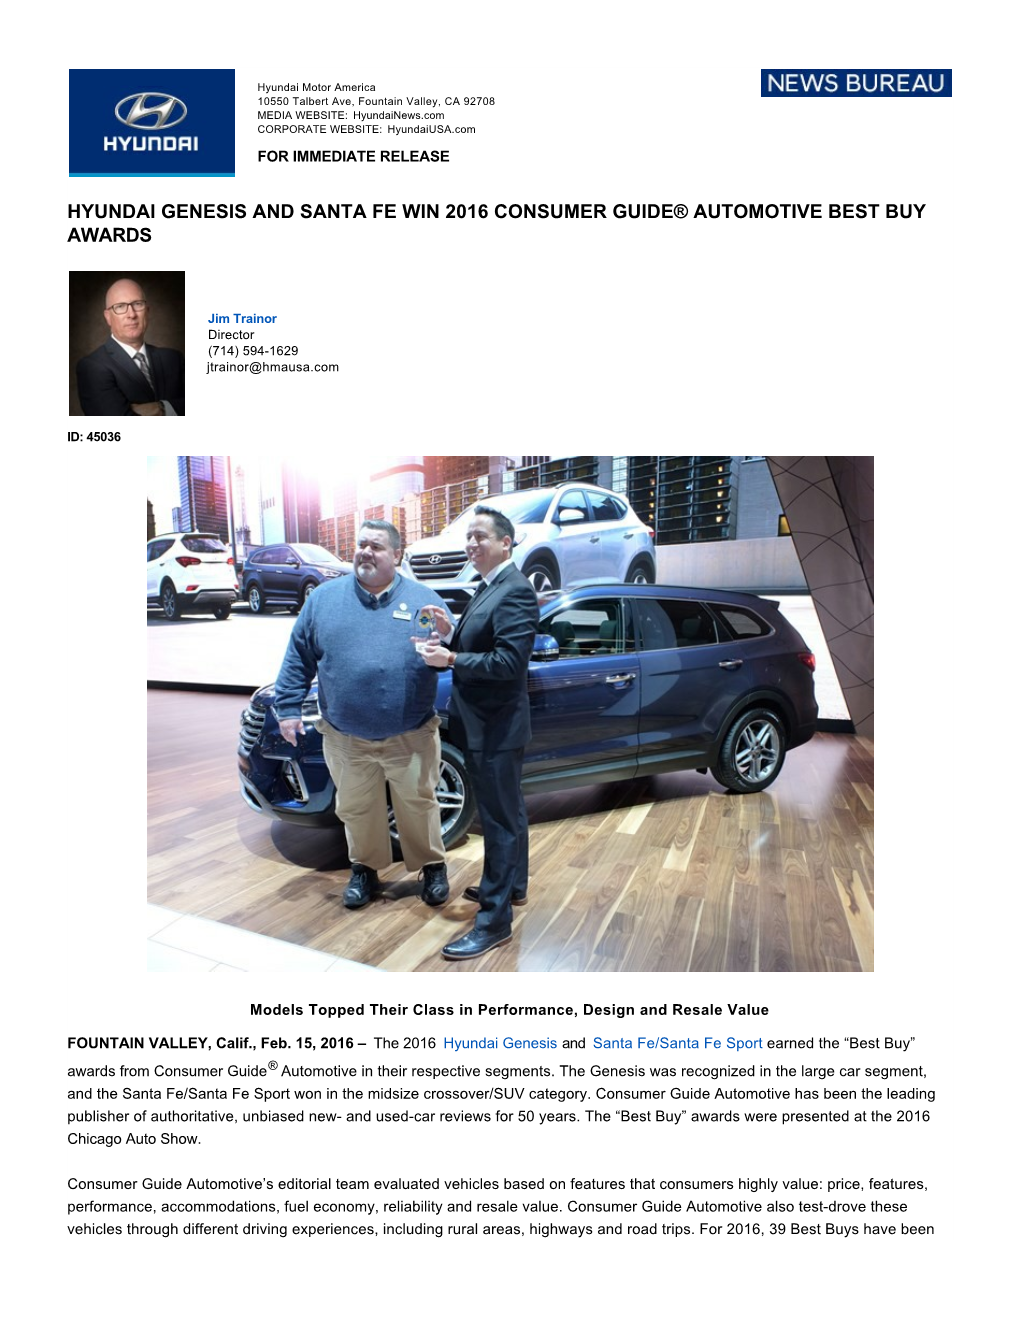 Hyundai Genesis and Santa Fe Win 2016 Consumer Guide® Automotive Best Buy Awards